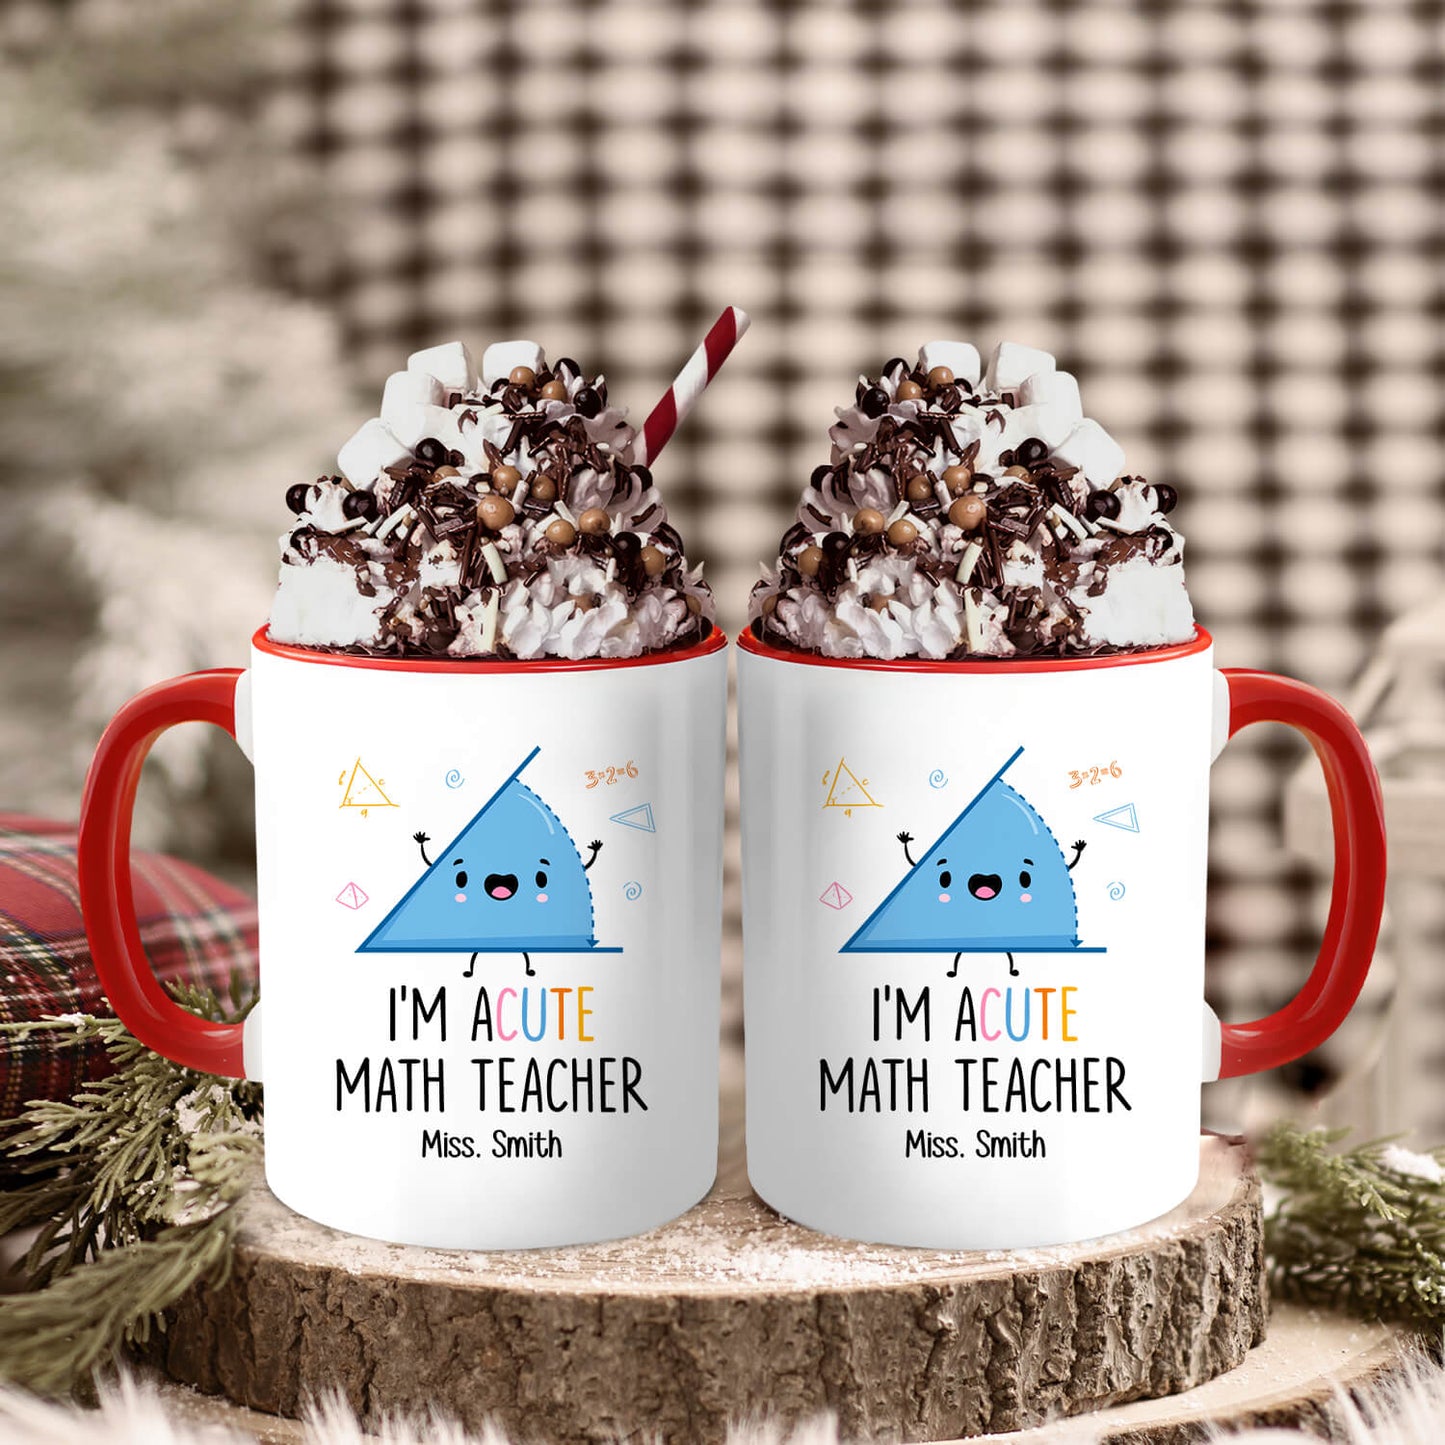 I'm Acute Math Teacher - Personalized Teacher's Day, Birthday or Christmas gift For Math Teacher - Custom Accent Mug - MyMindfulGifts